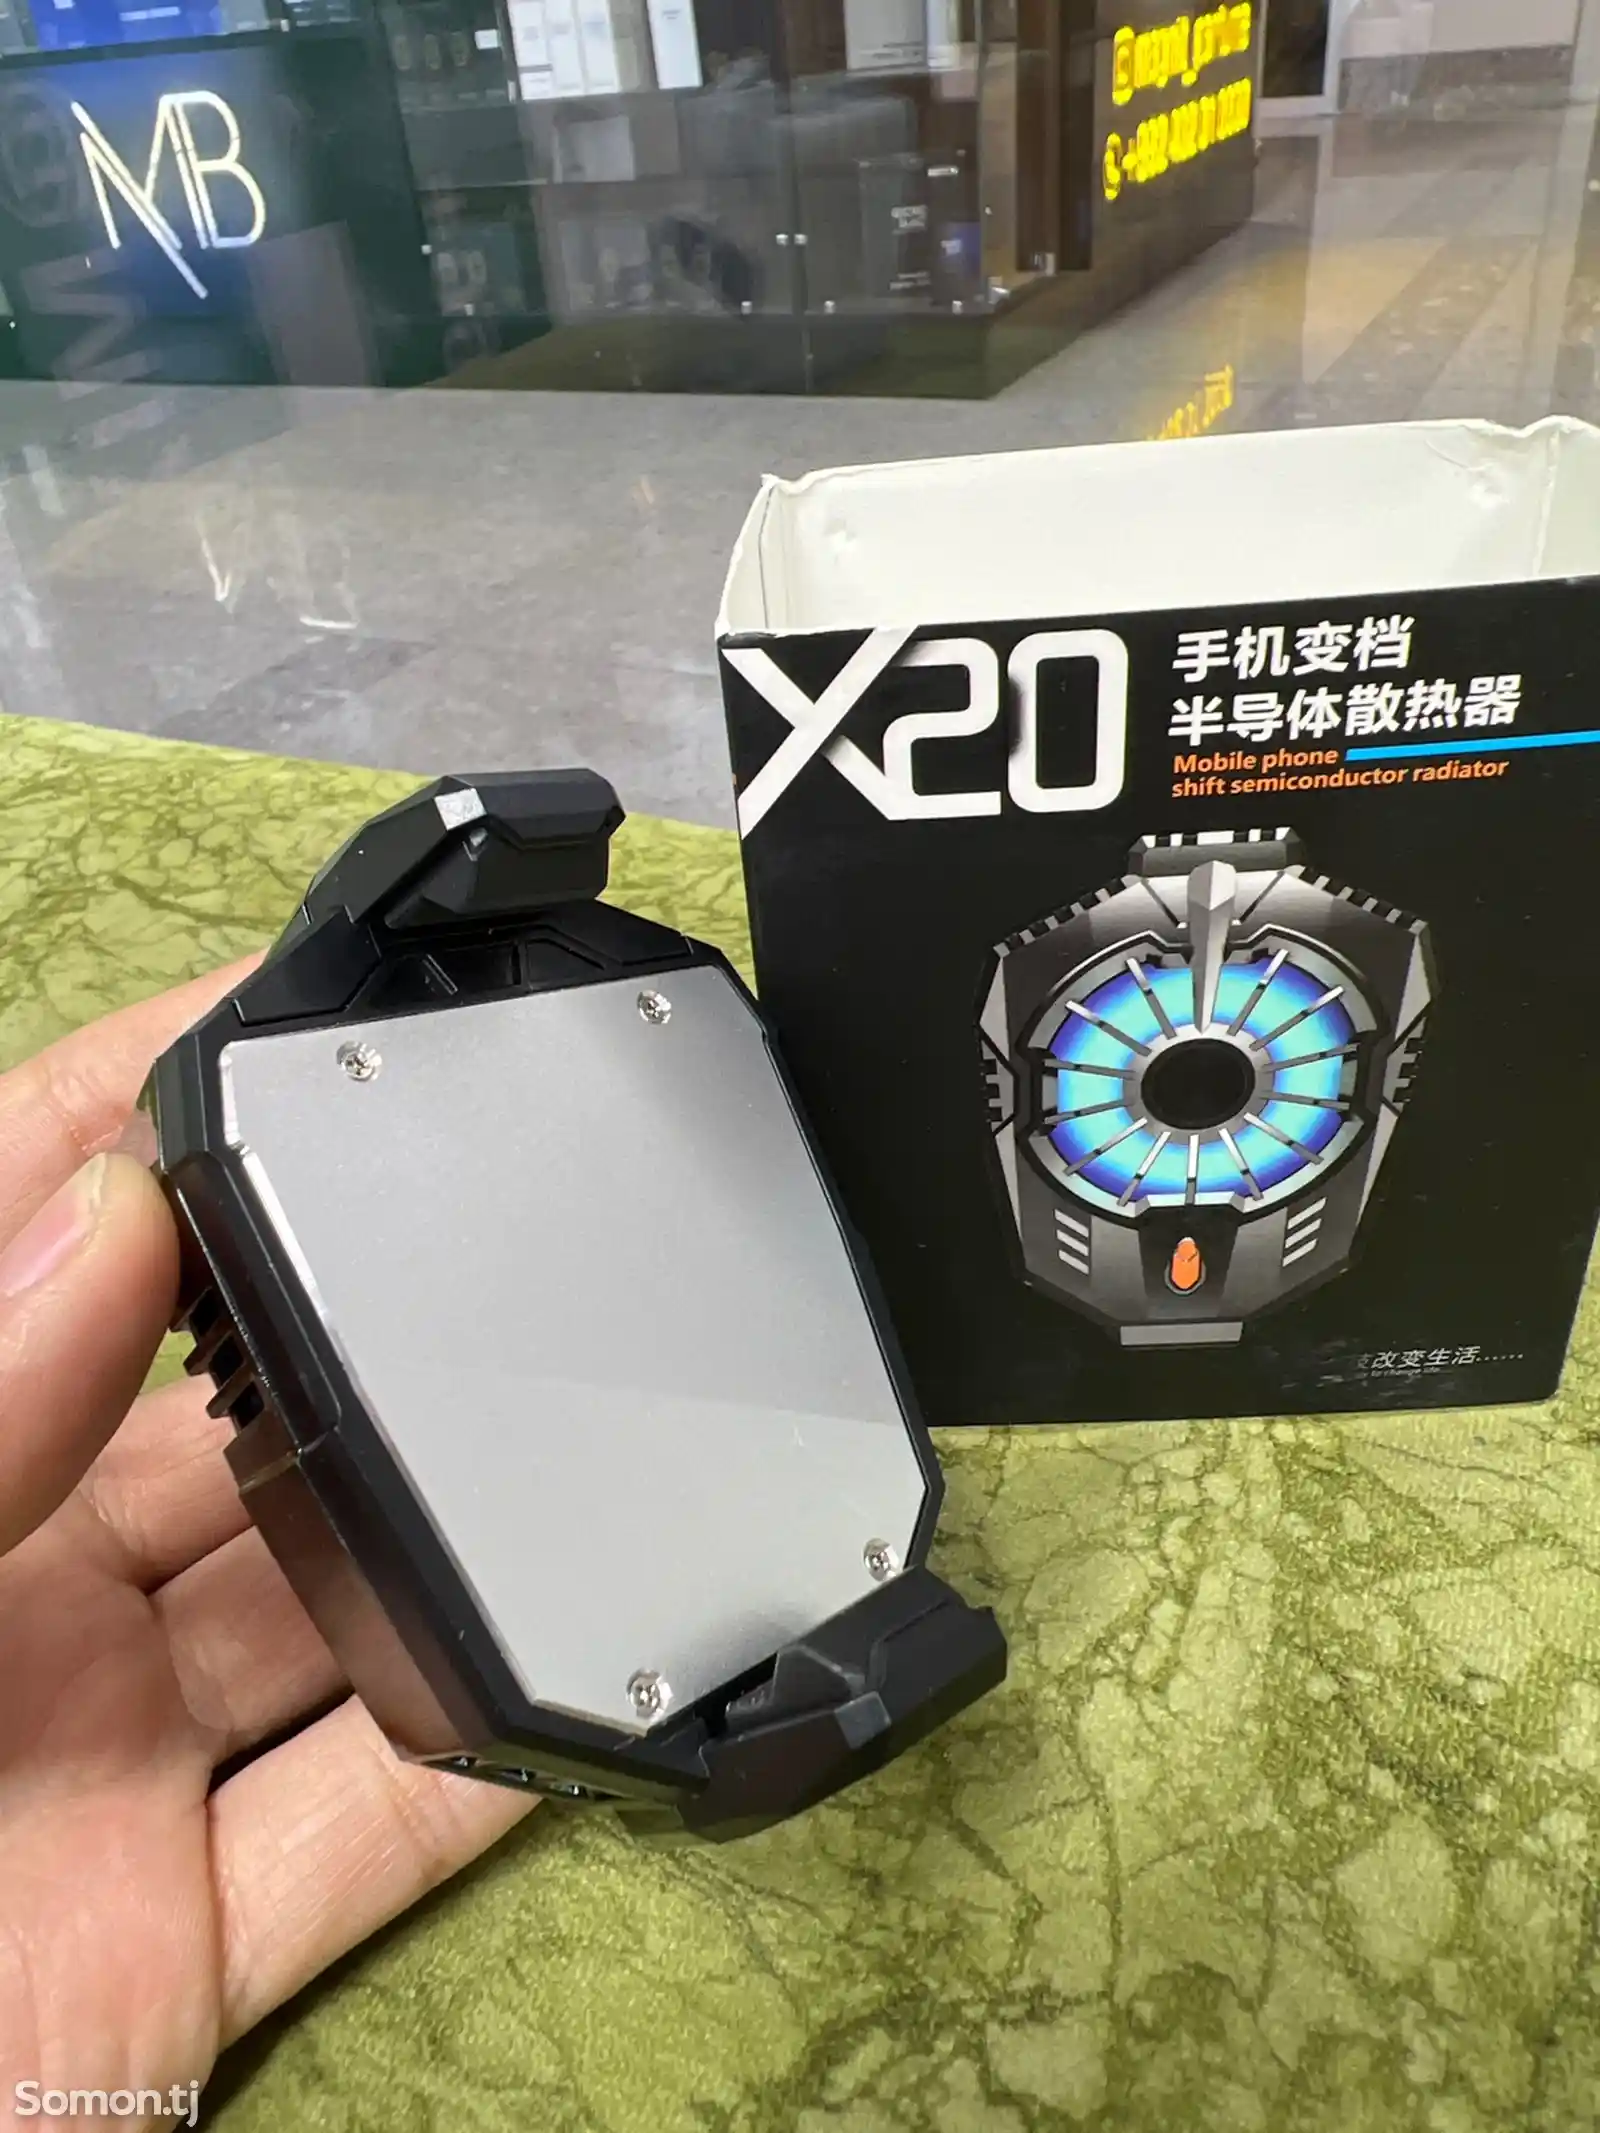 Вентилятор охладитель для смартфона X20-2